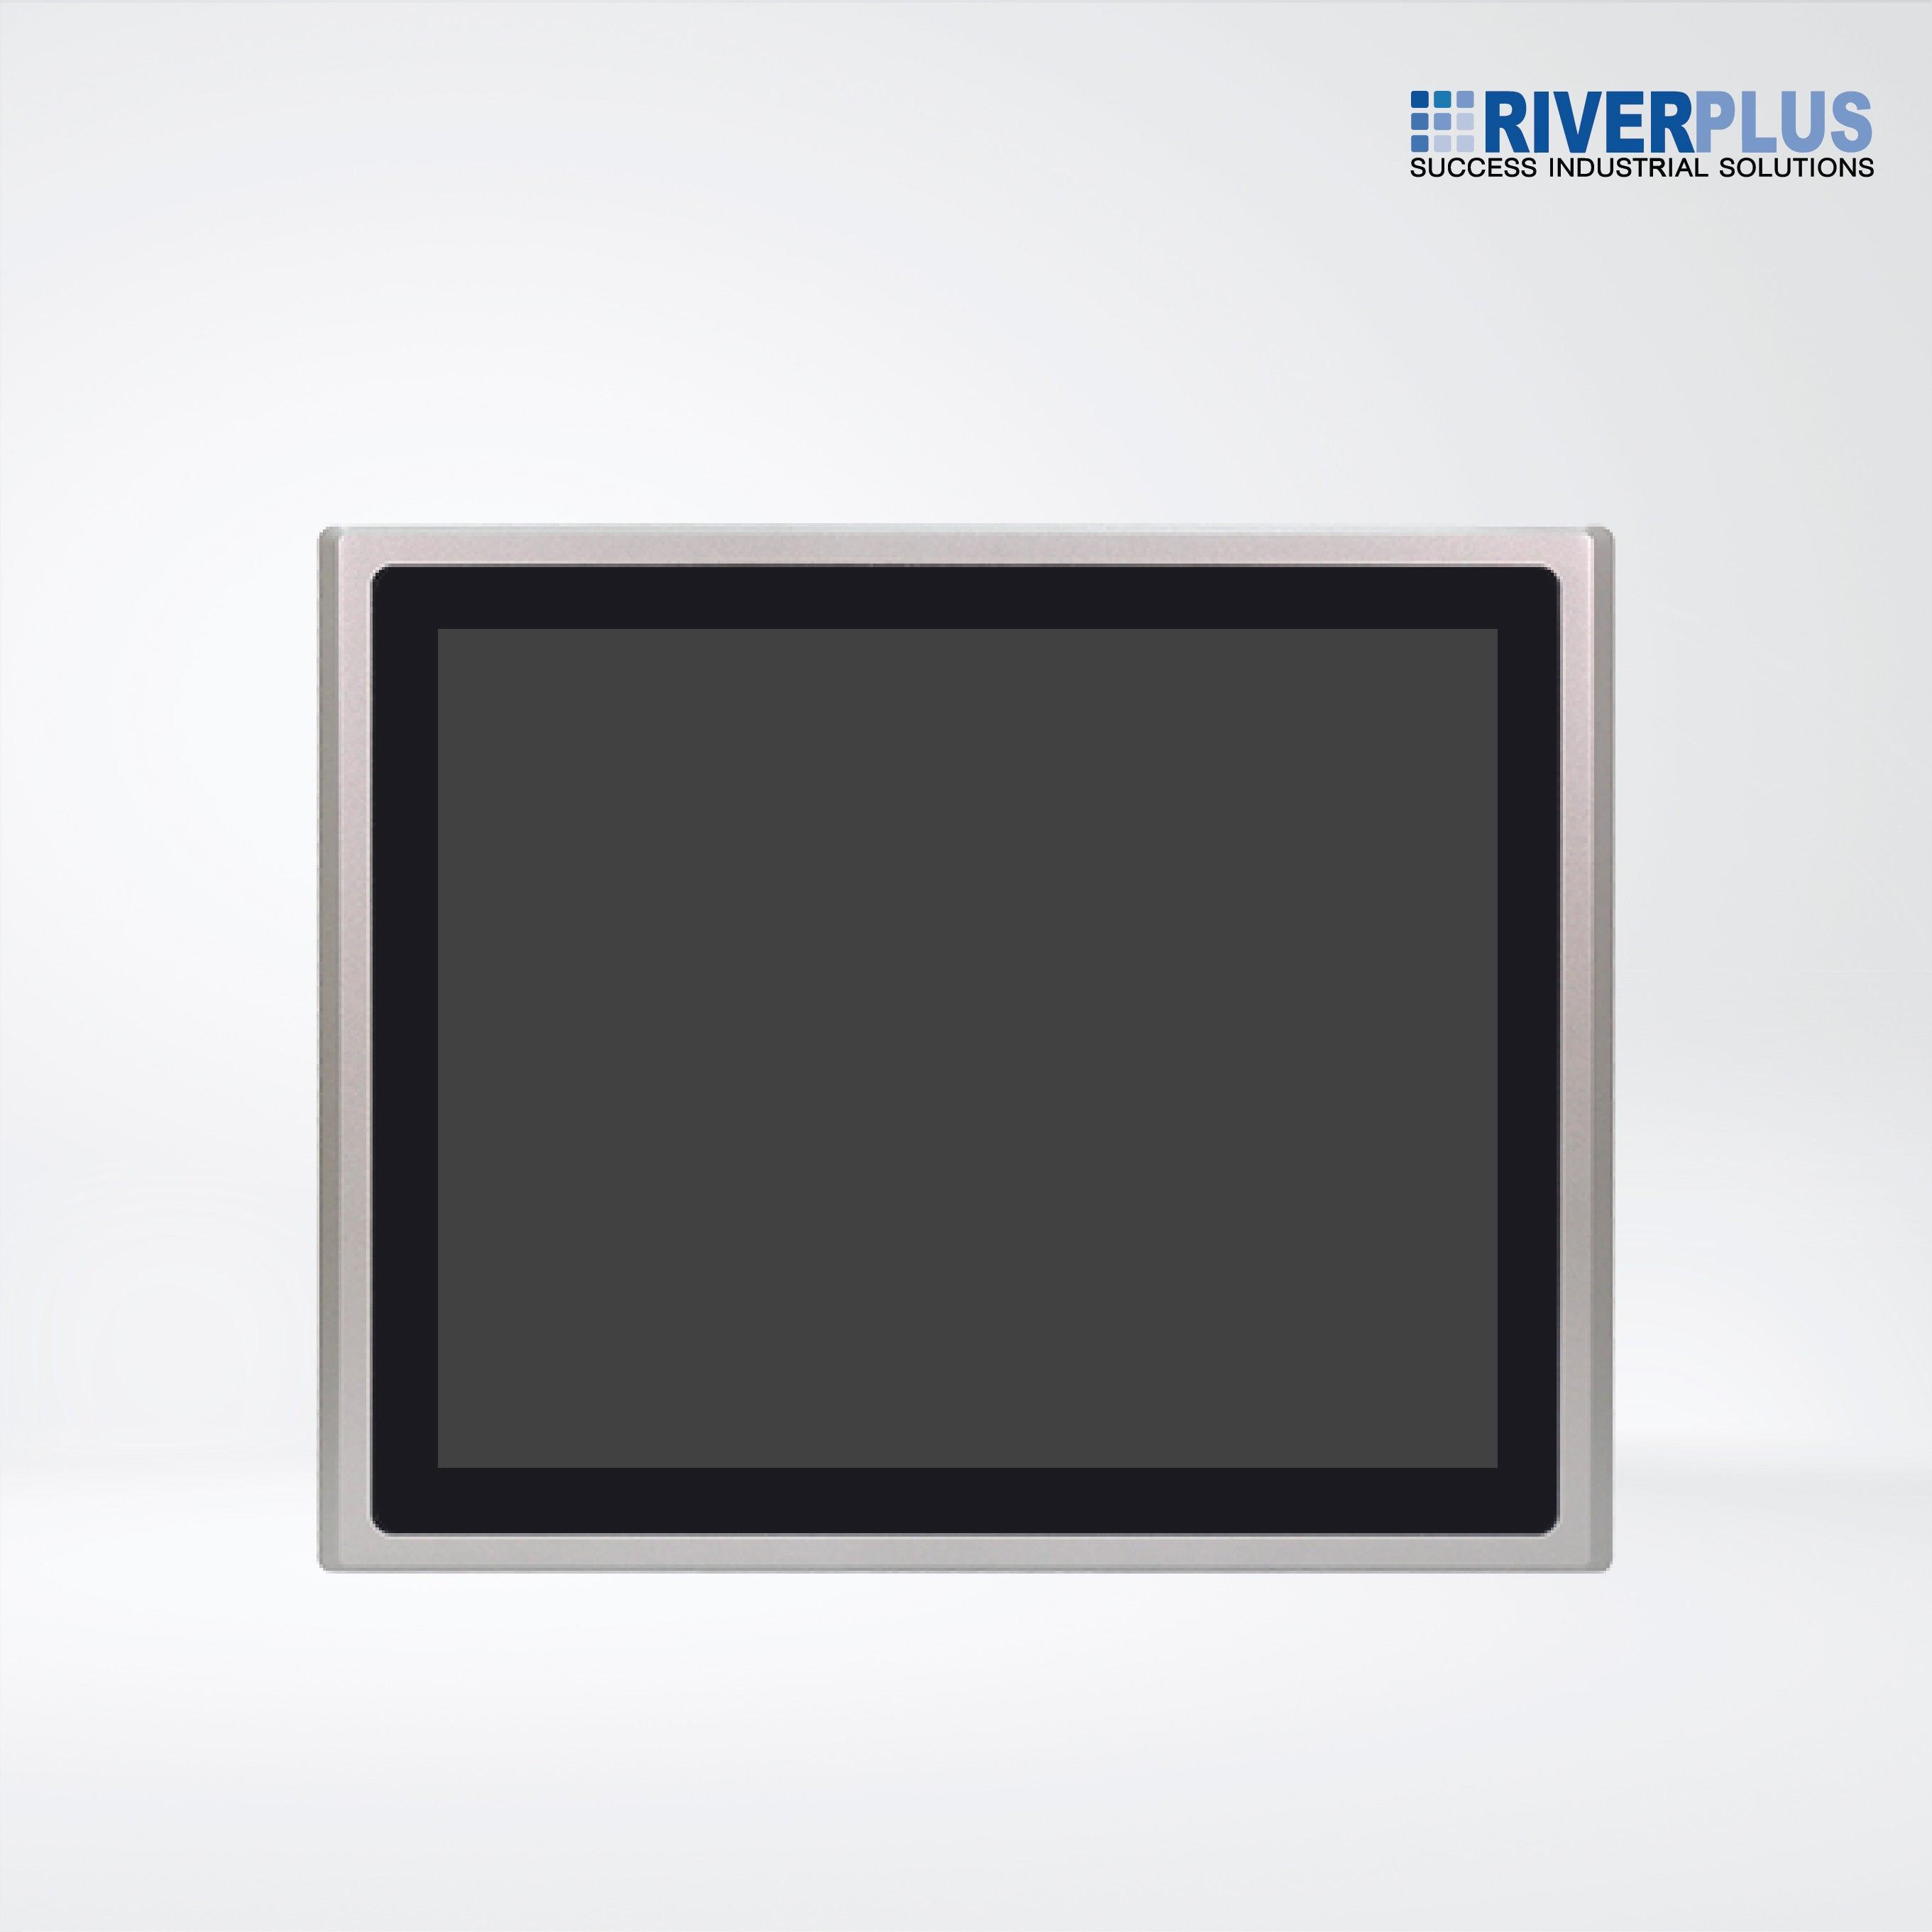 ARCHMI-919APH 6th Gen. Intel Core i3/i5, Fanless Industrial Compact Size Panel PC - Riverplus